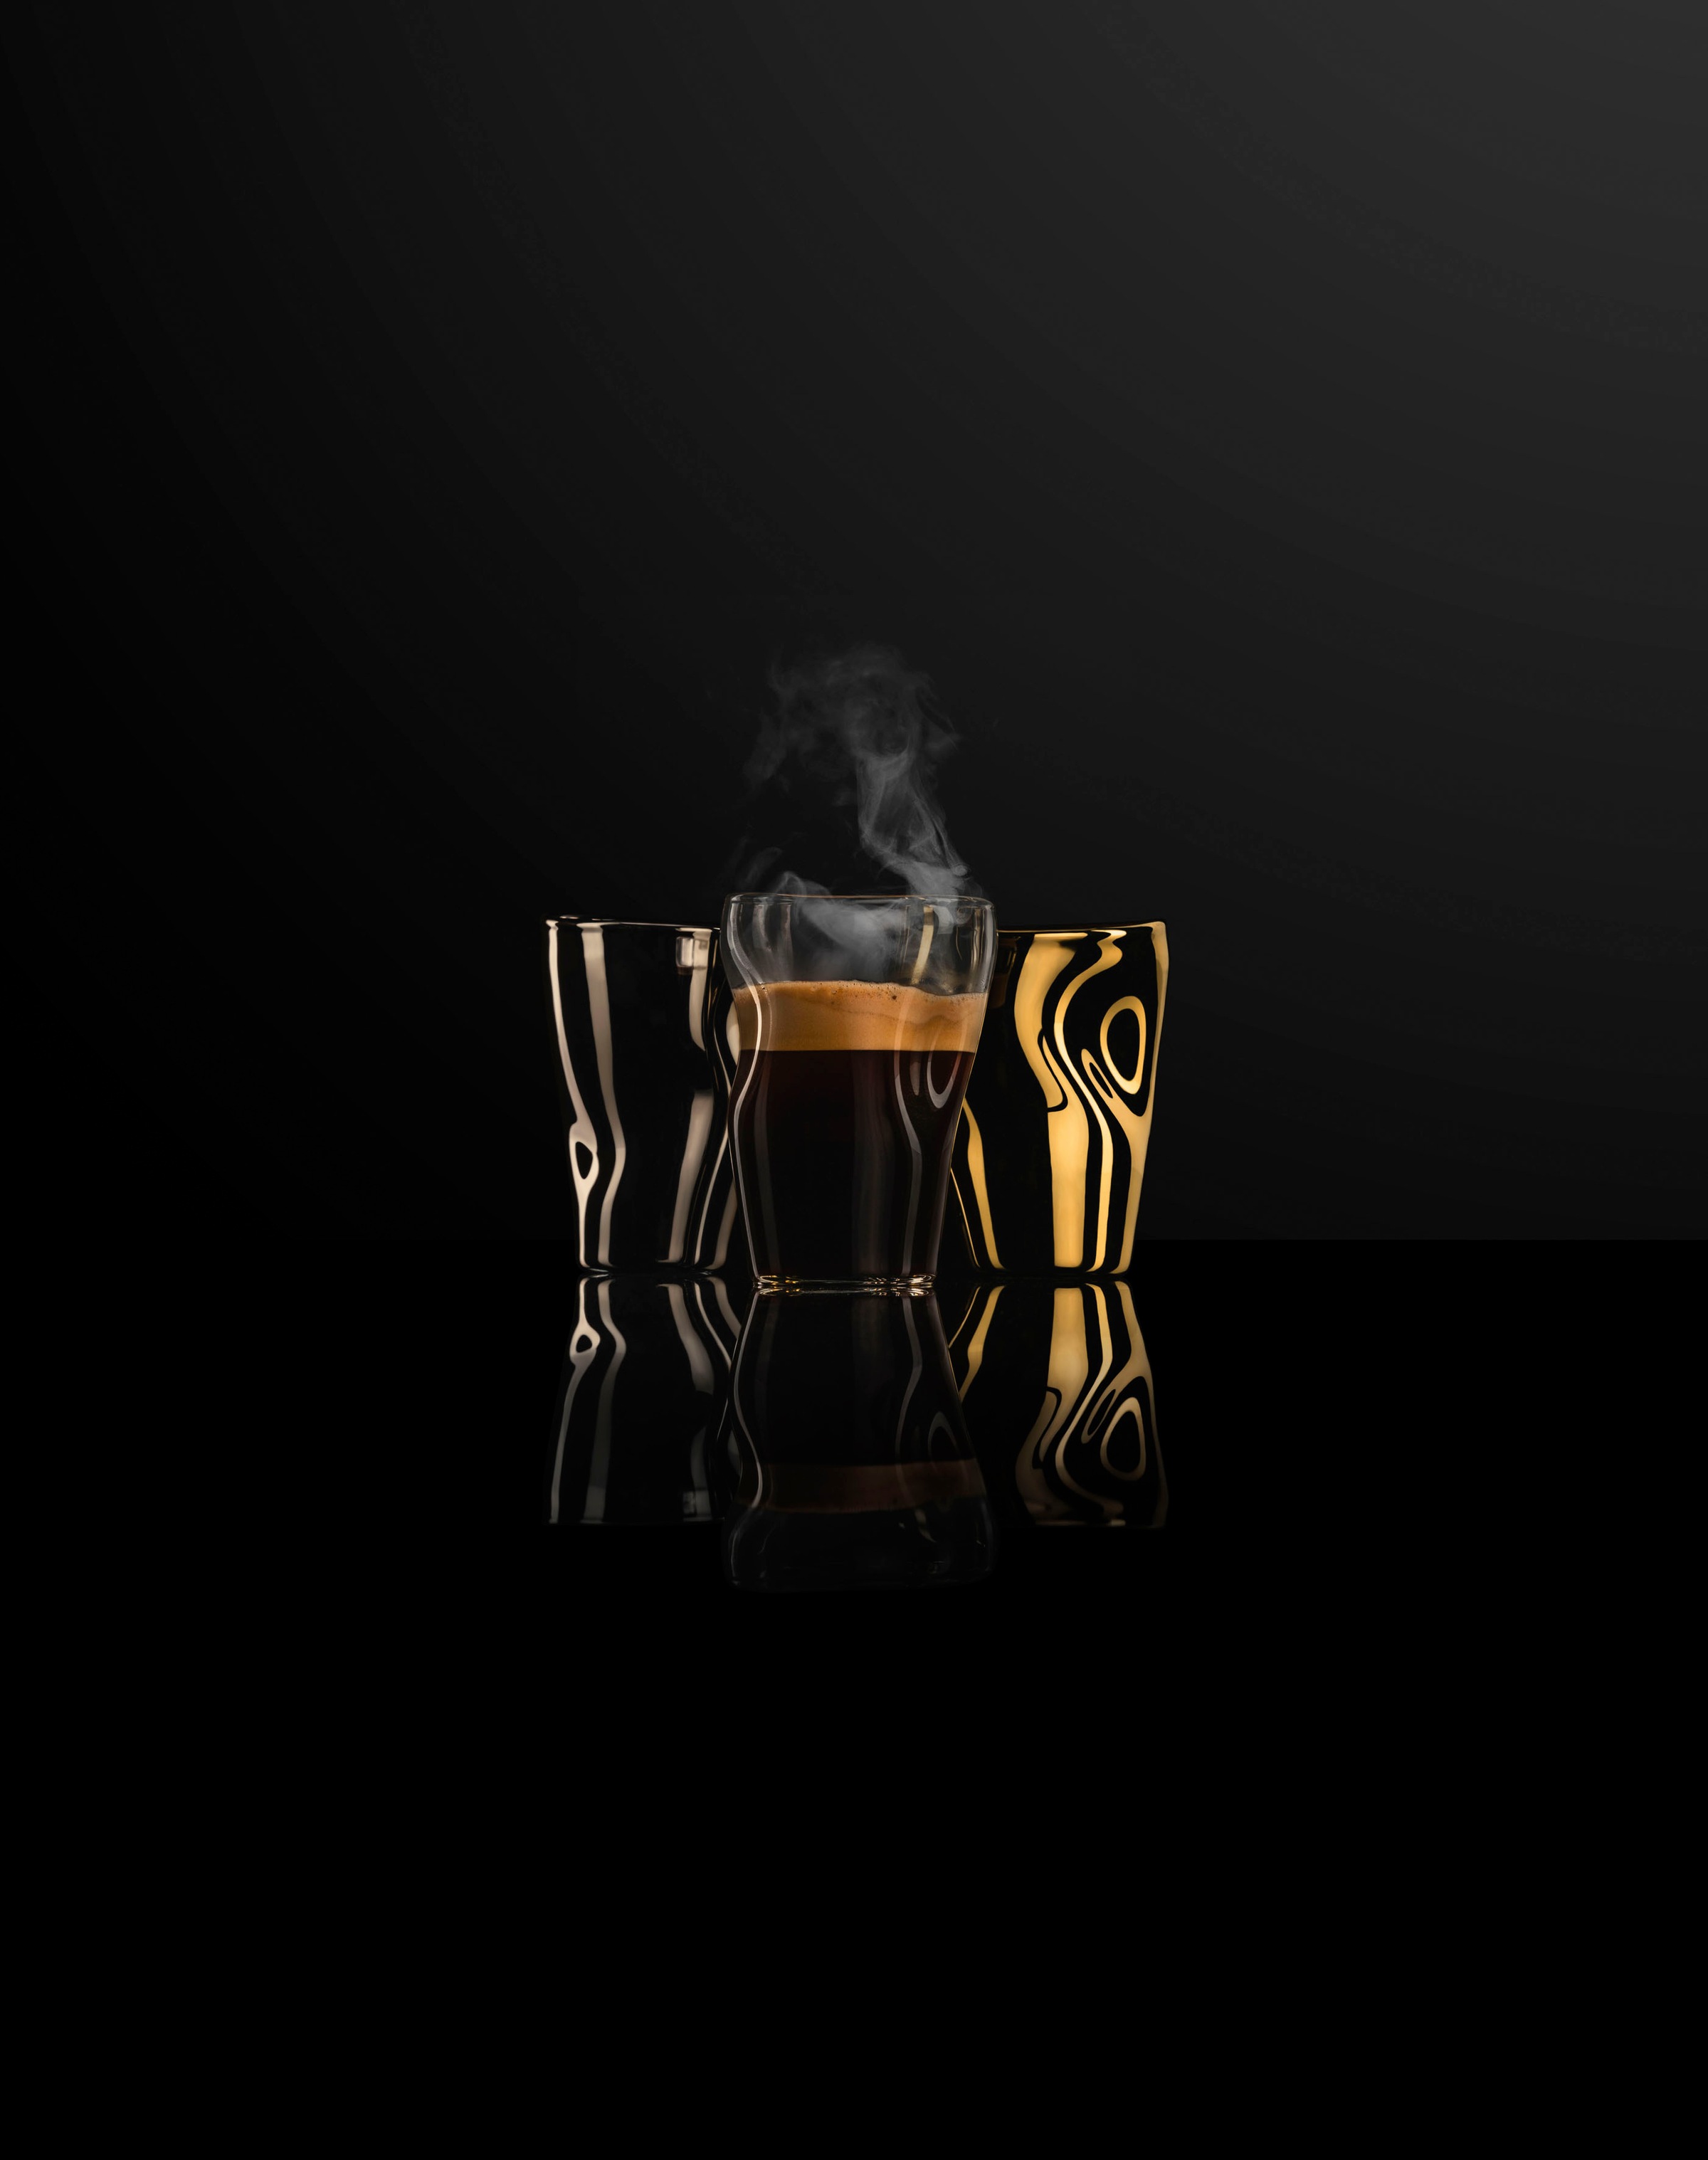 Eisch Espressoglas »UNIK«, (Set, 4 tlg., 4 Espressogläser in Geschenkröhre), Espressoglas, 4-teilig, 100 ml